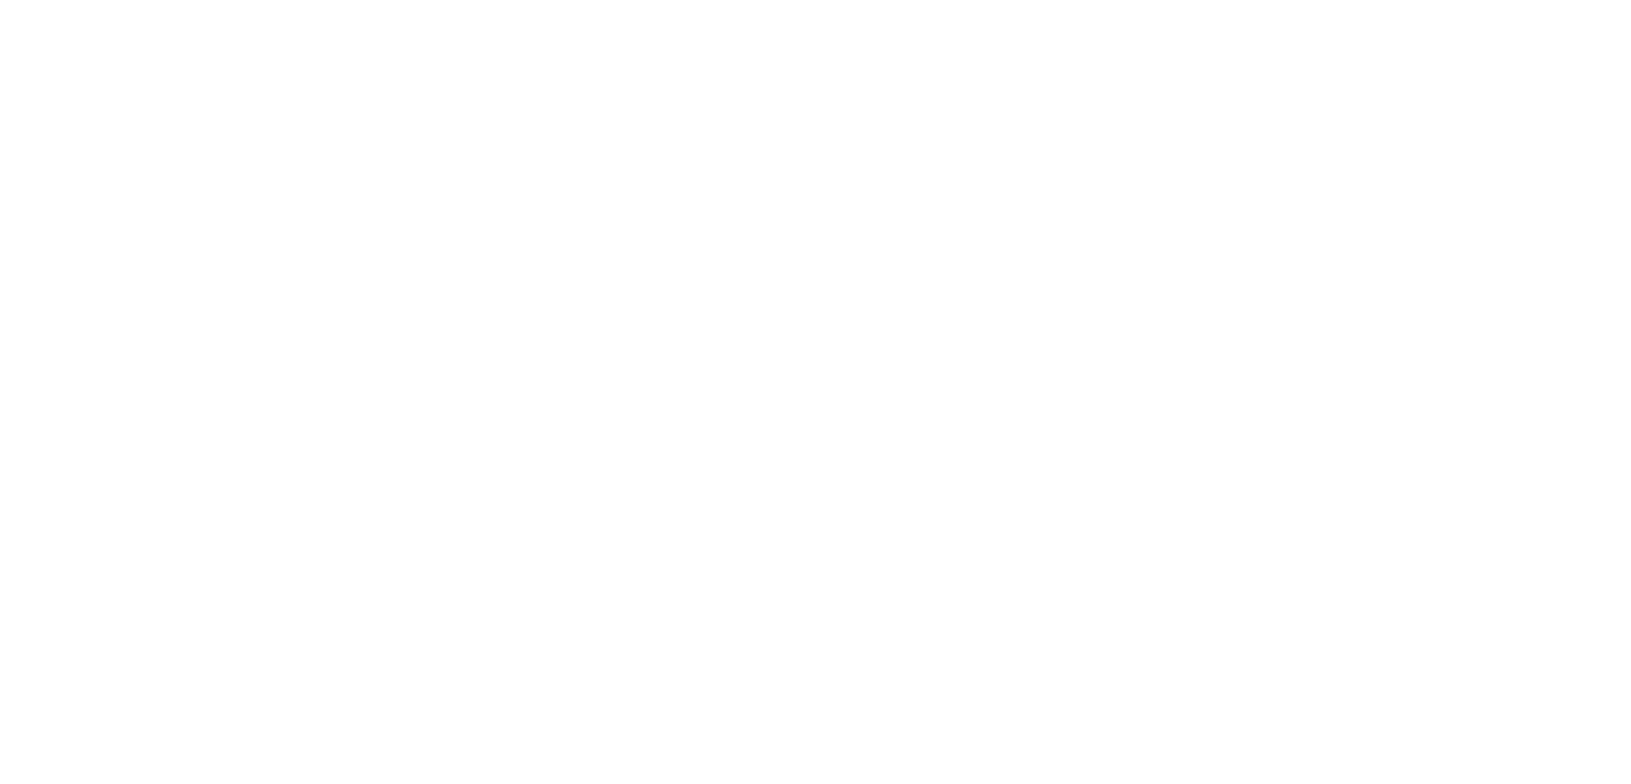 Cracking the chocolate code